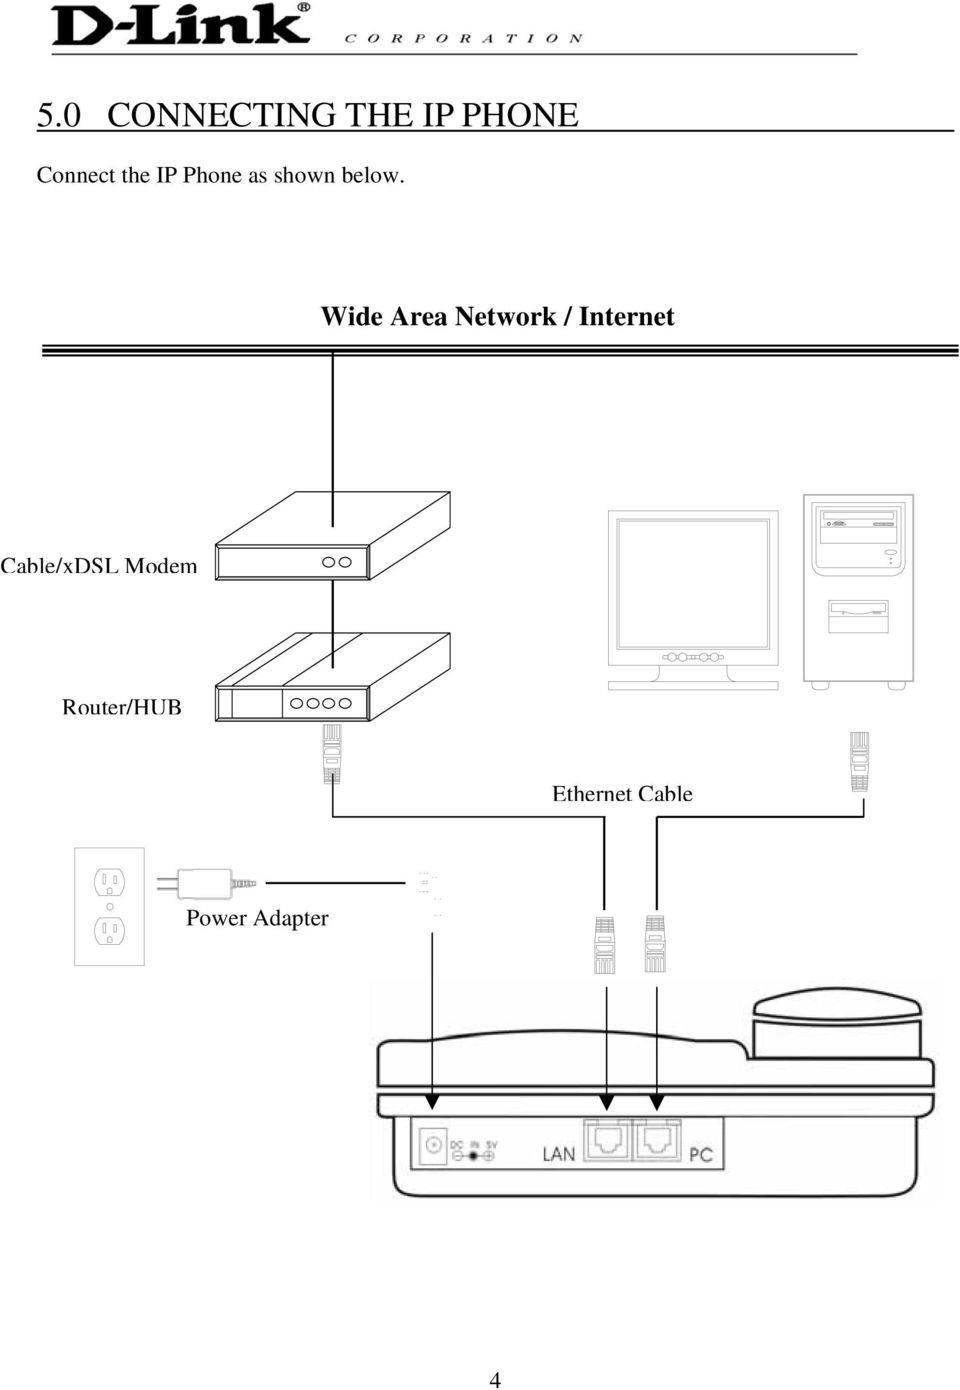 Wide Area Network / Internet